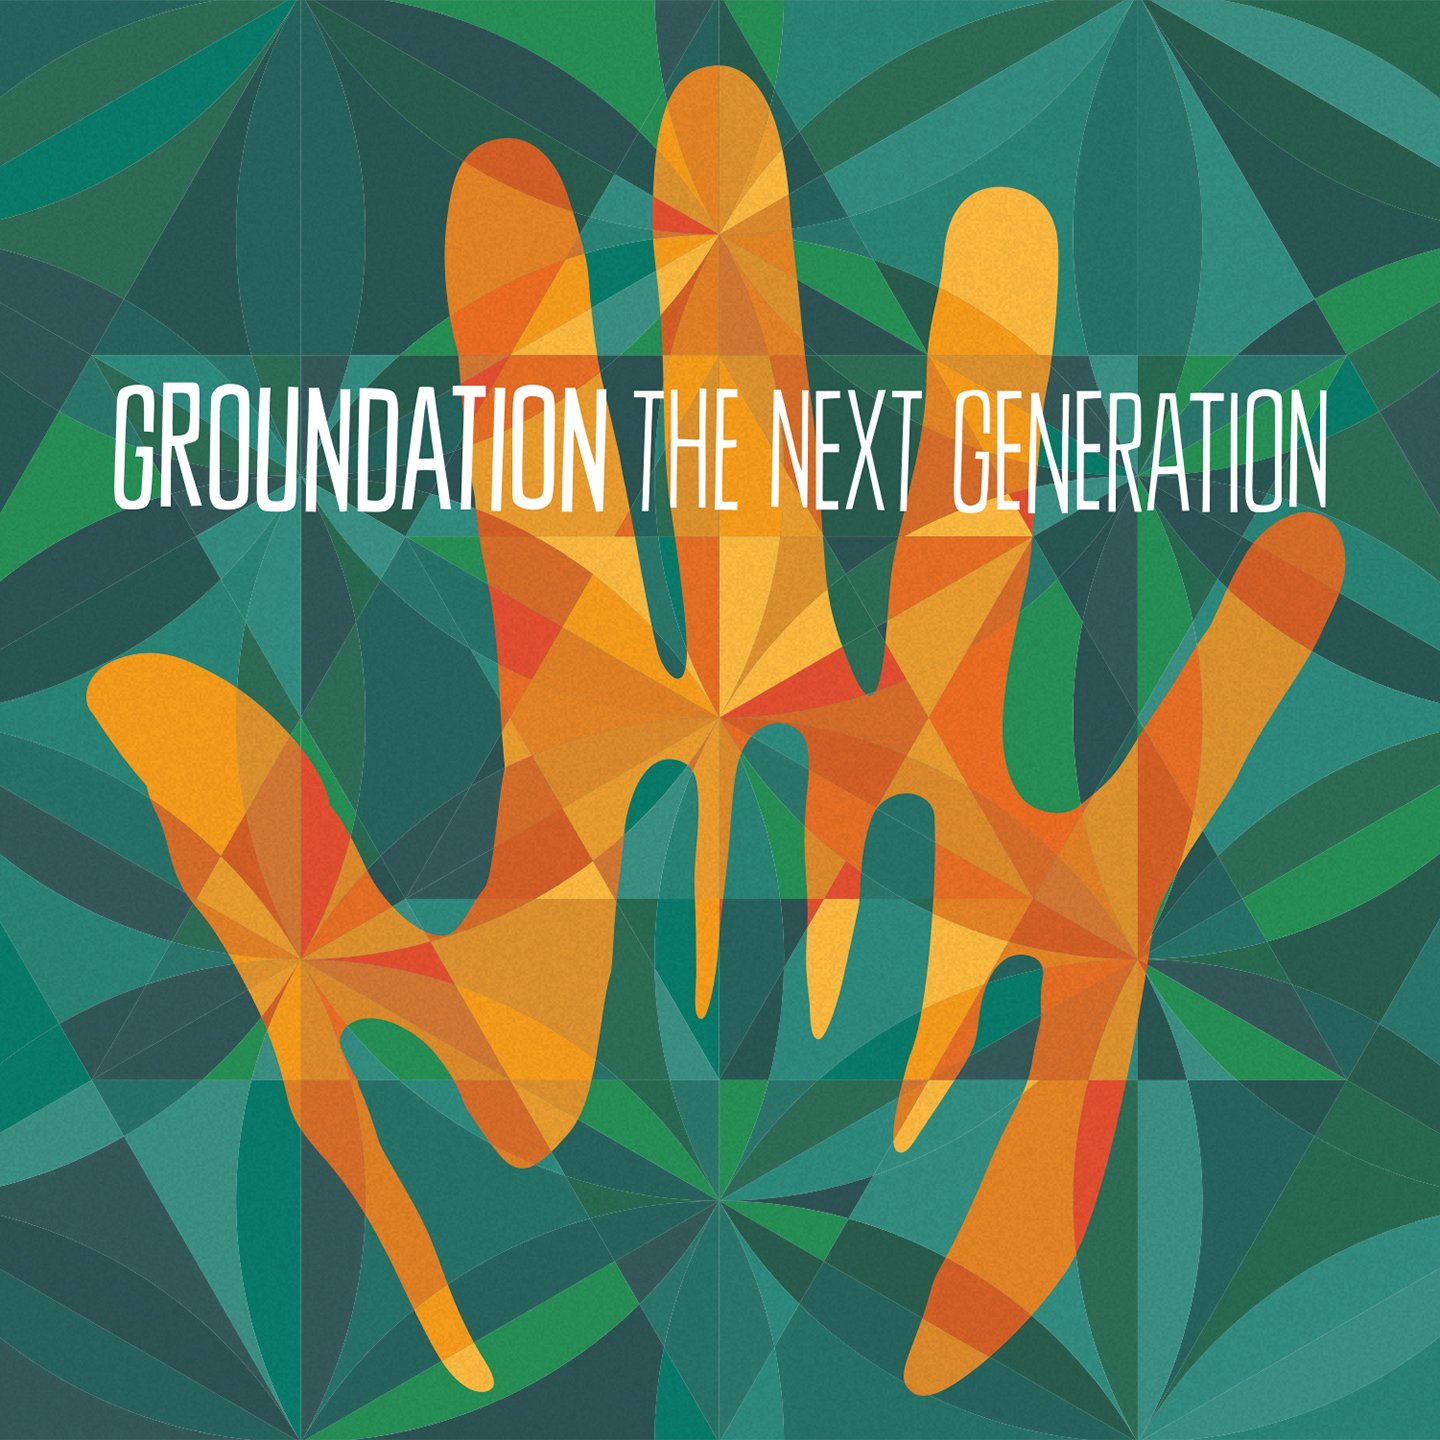 The Next Generation (Gatefold / Download) [Vinyl LP]